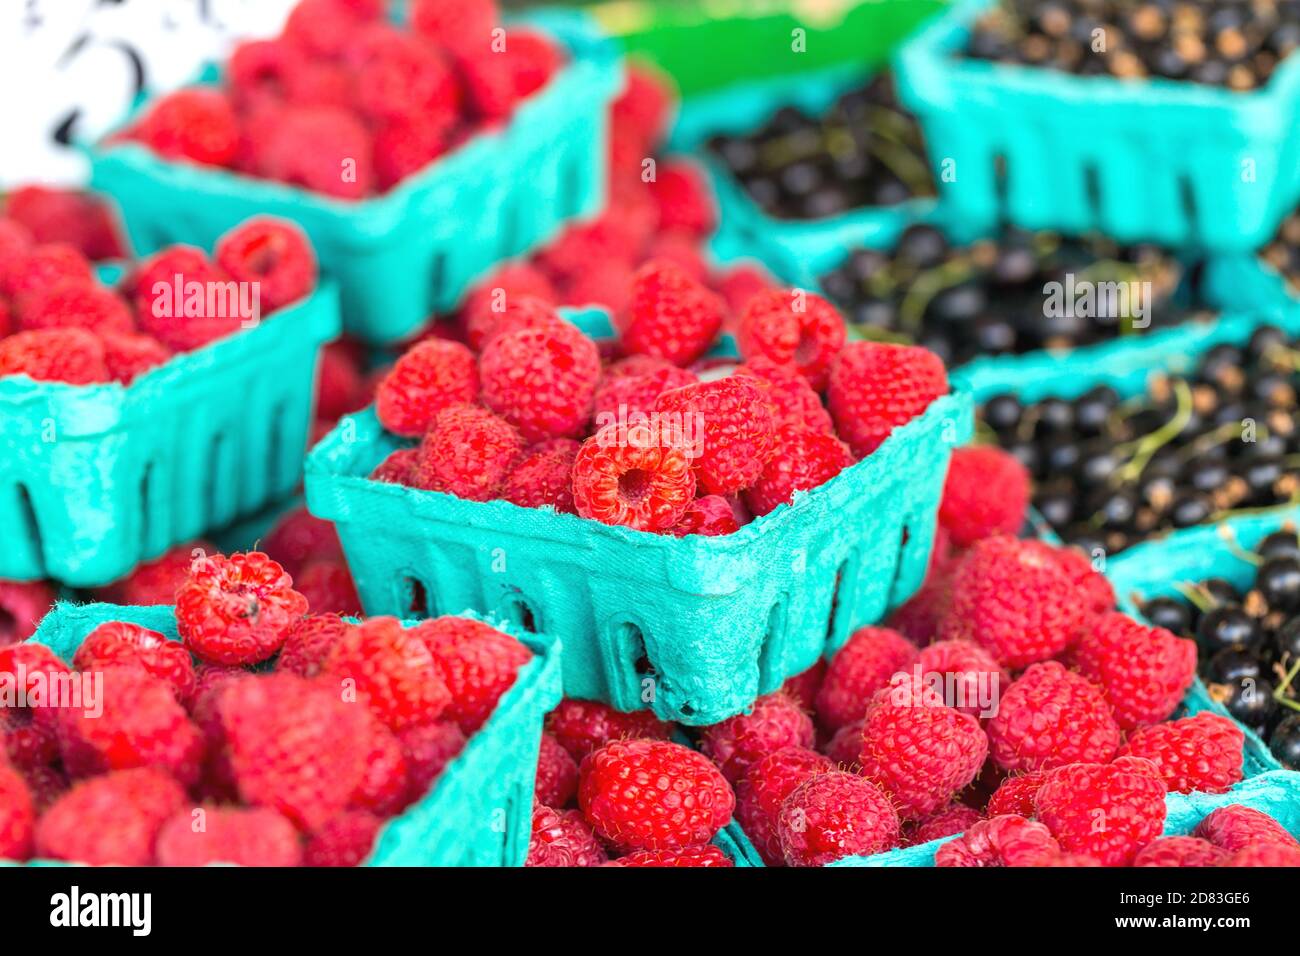 Seattle Farmers Market, Washington-USA Stock Photo